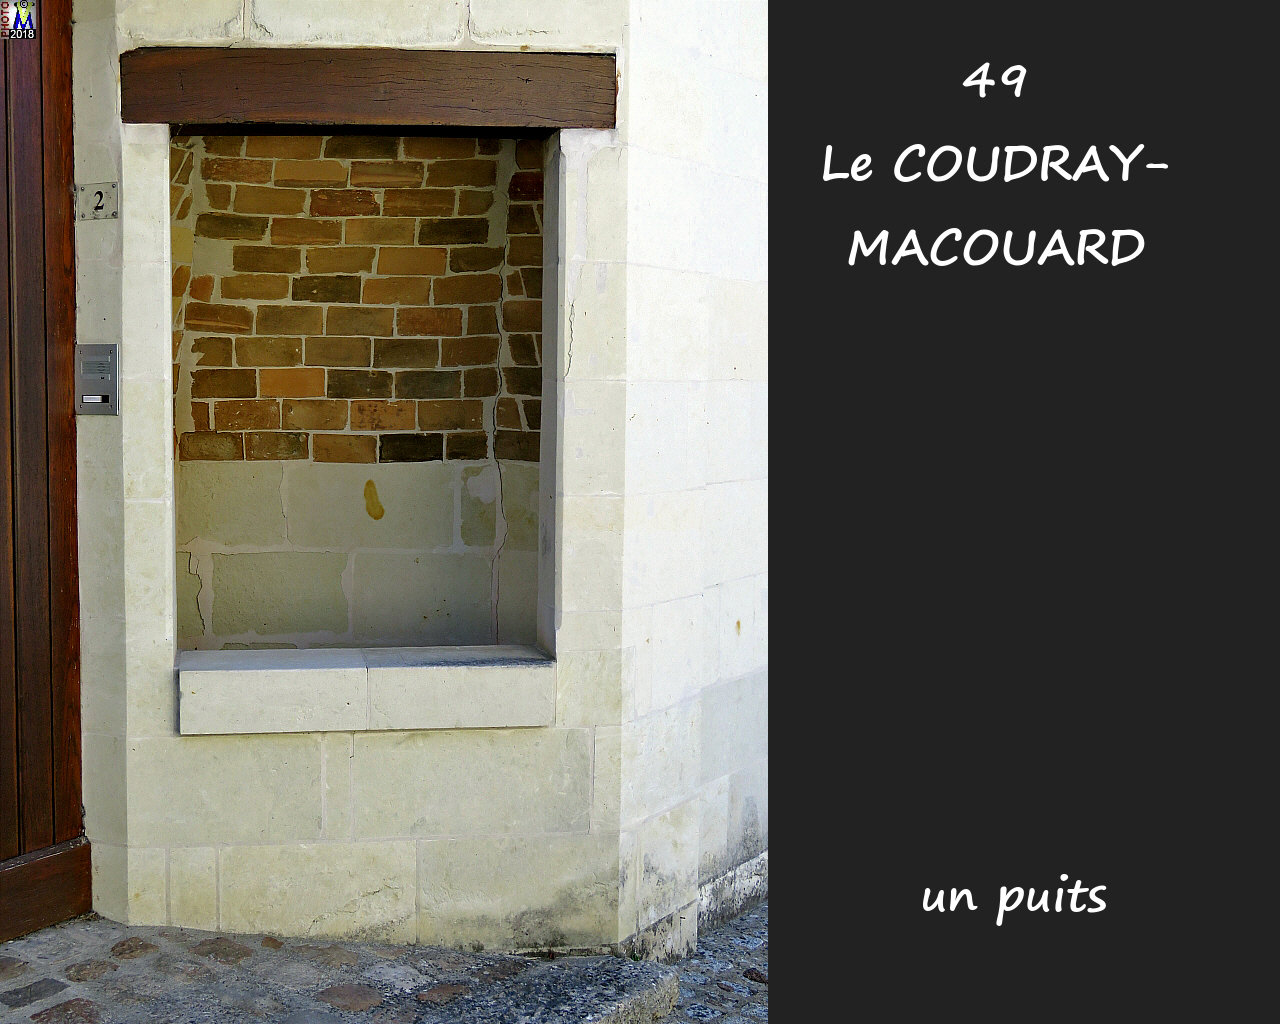 49COUDRAY-MACOUARD_puits_1000.jpg